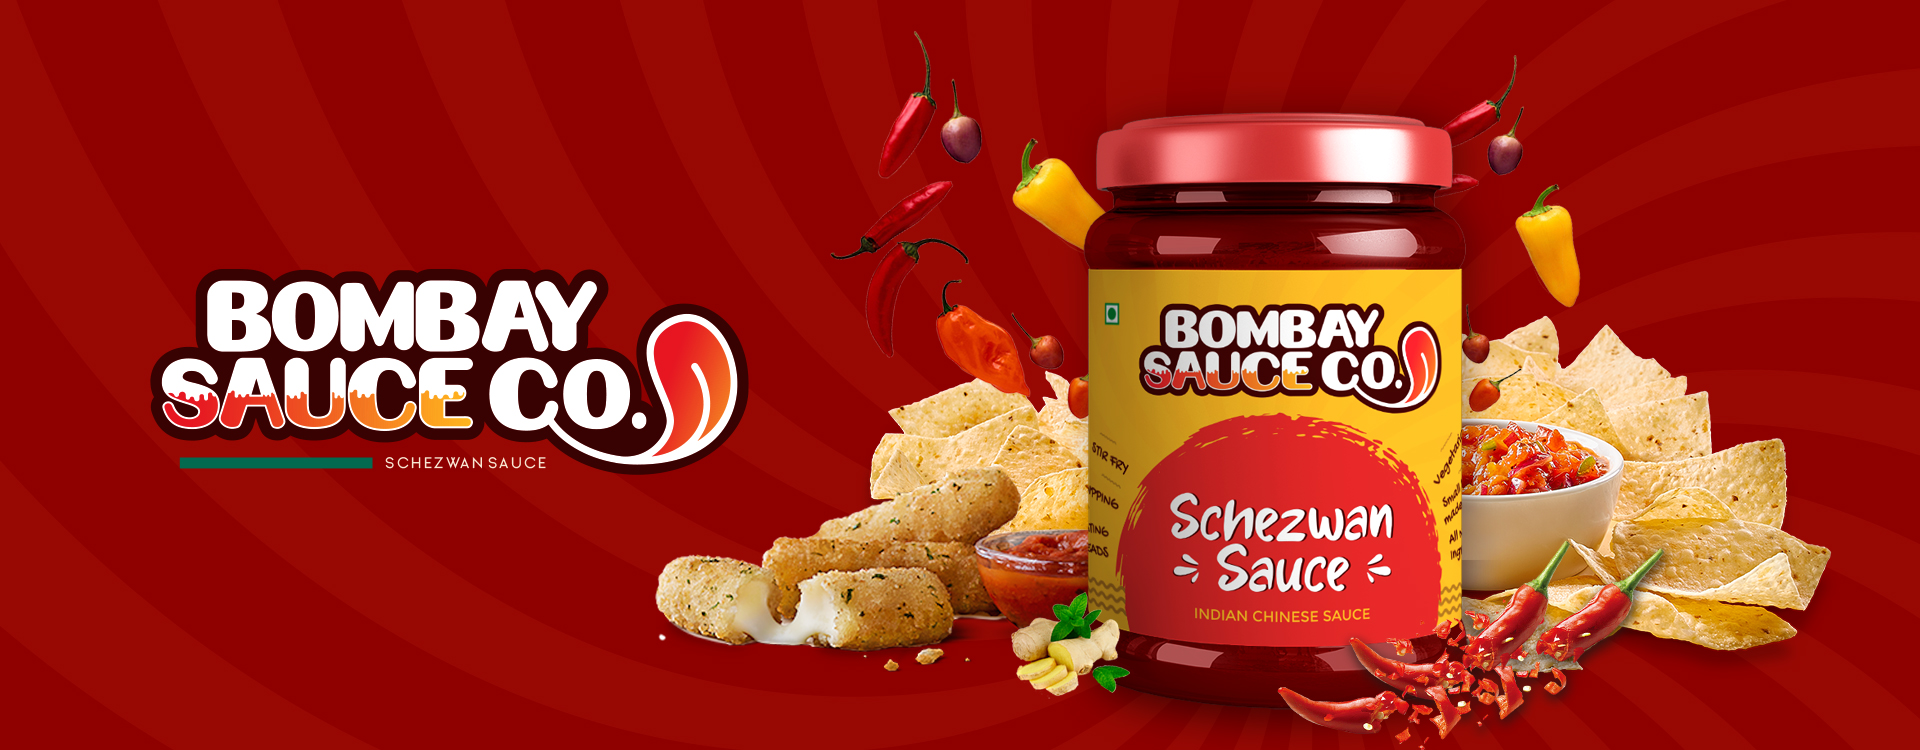 Bombay Sauce Co.